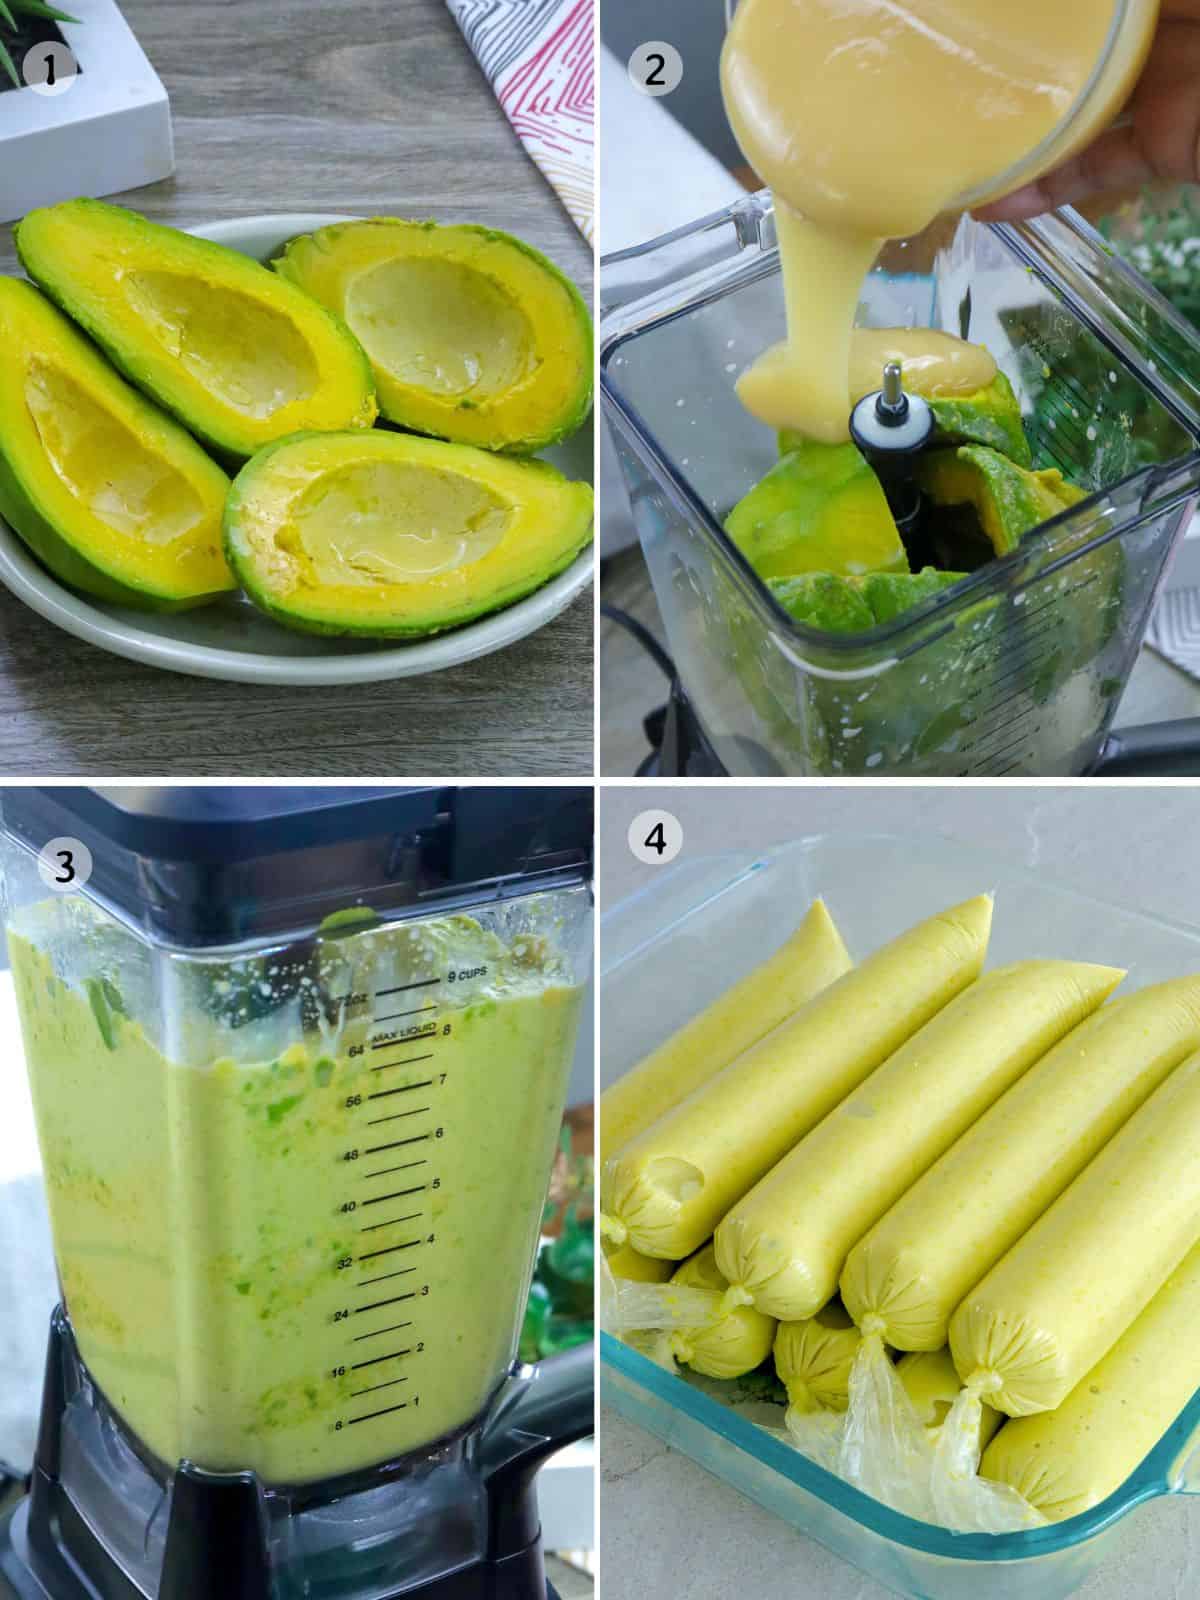 https://www.kawalingpinoy.com/wp-content/uploads/2014/03/avocado-ice-candy-process.jpg